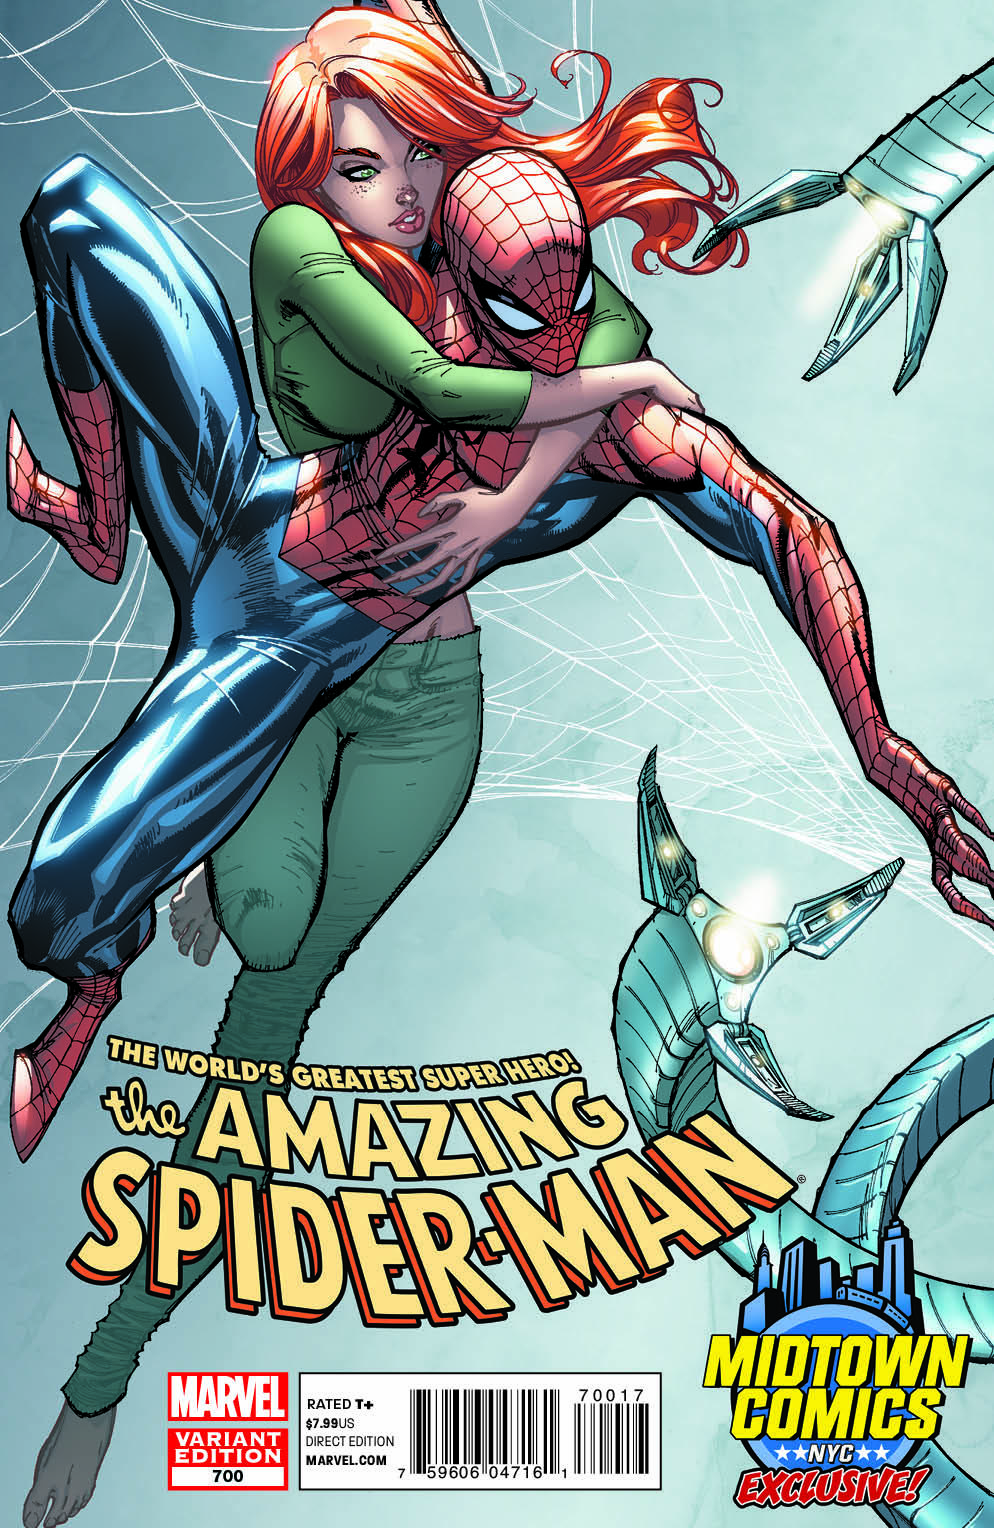 J Scott Campbell Variant of Amazing Spider-Man #700